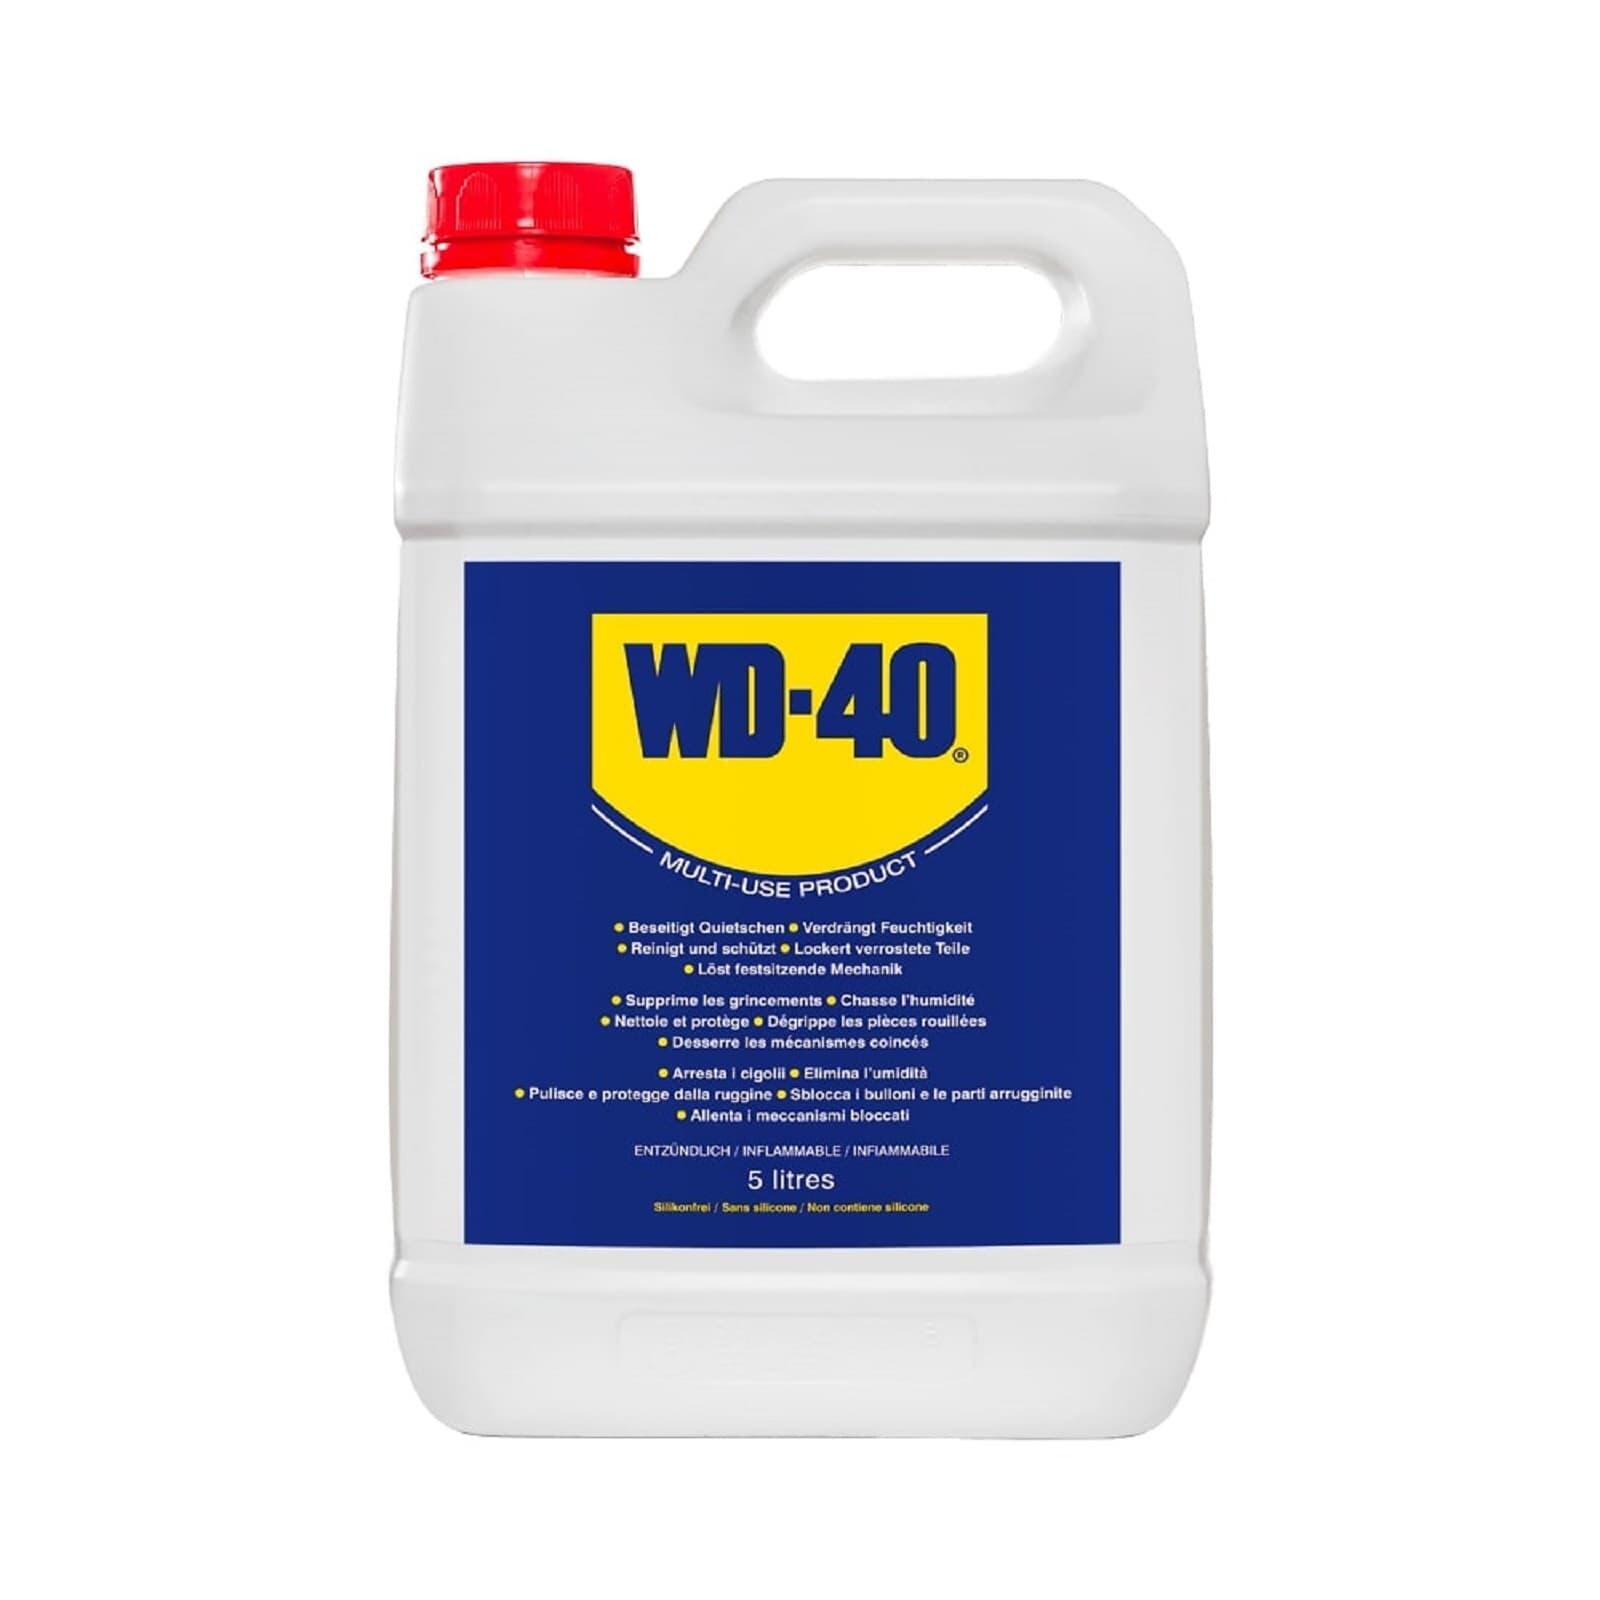 WD-40 Multi-Use Flexible Hose Spray - 400ml